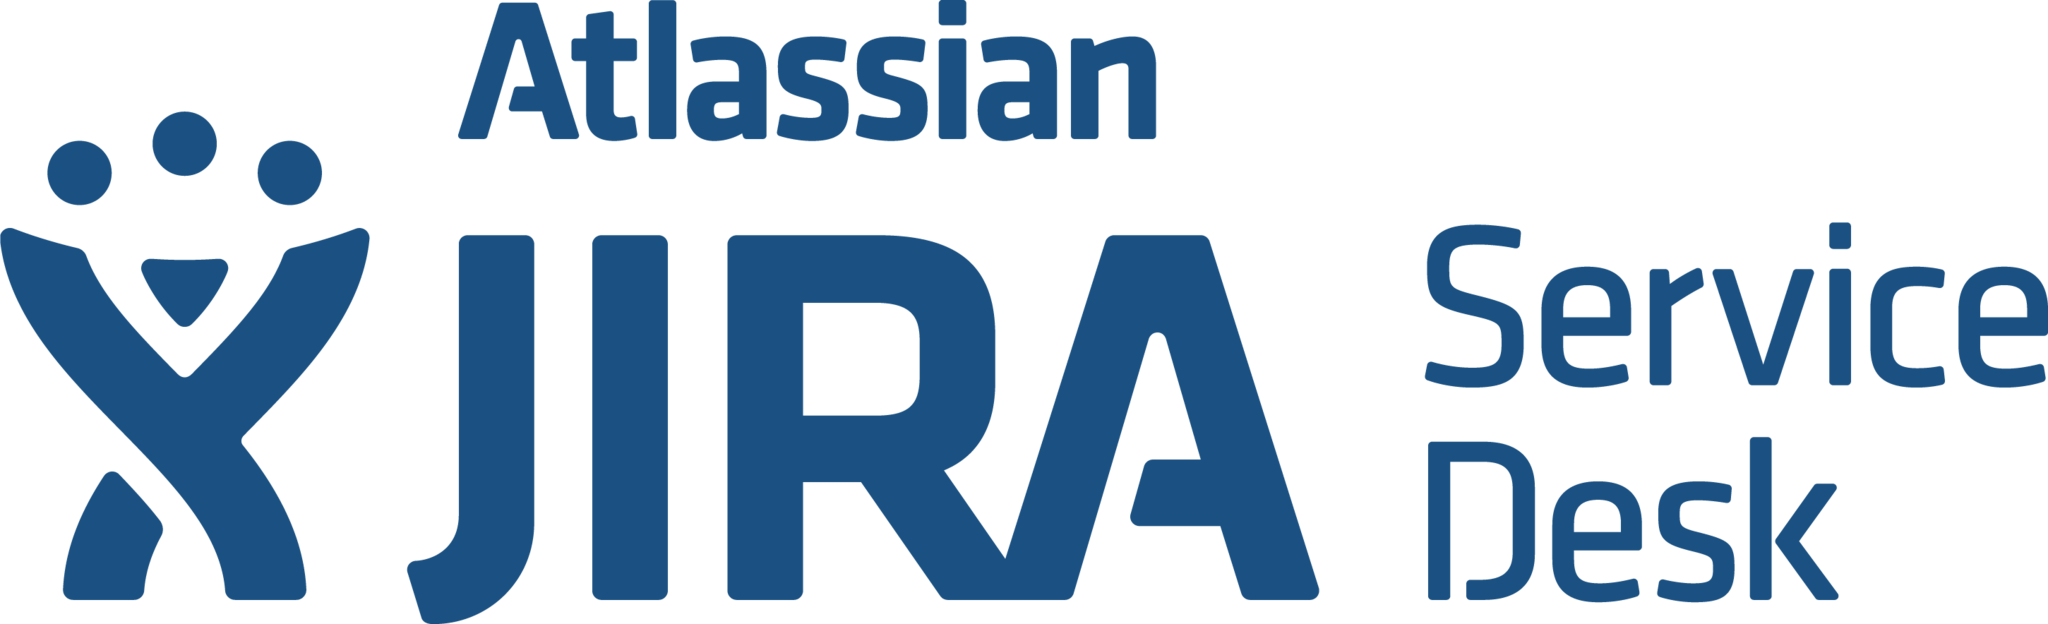 Https atlassian net. Atlassian Jira. Jira logo. Продукты Atlassian. Atlassian Jira logo.